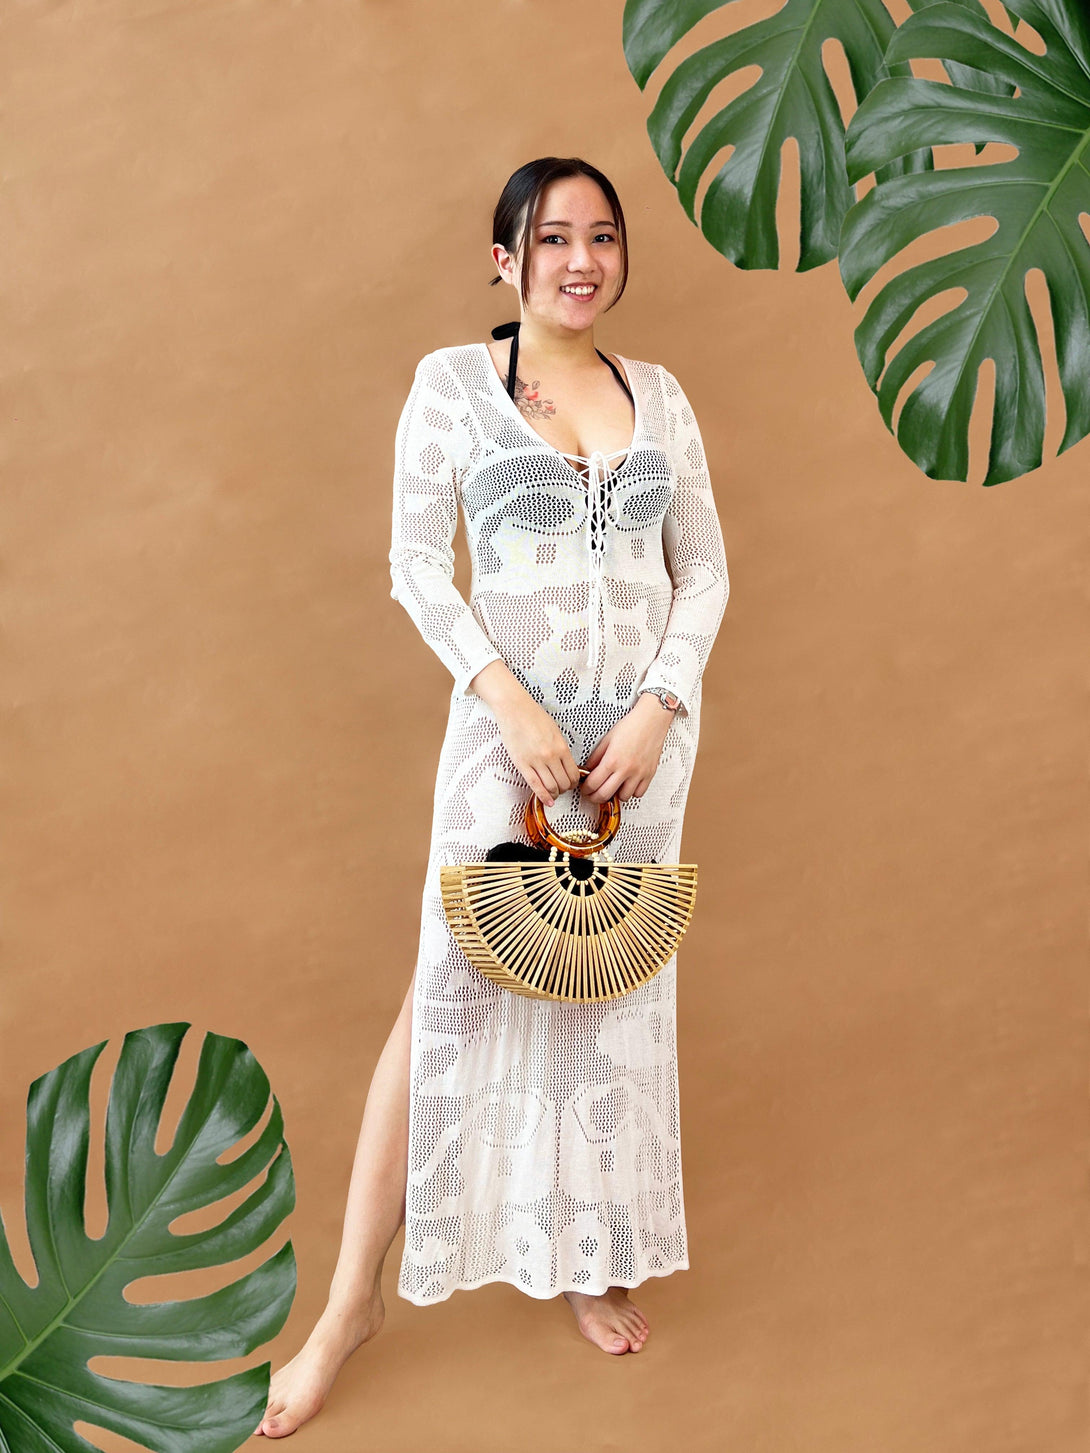 Luna Beach Half Moon Bamboo Handbag with Brown Acrylic Tortoiseshell Top Handle in Beige - Pink N' Proper